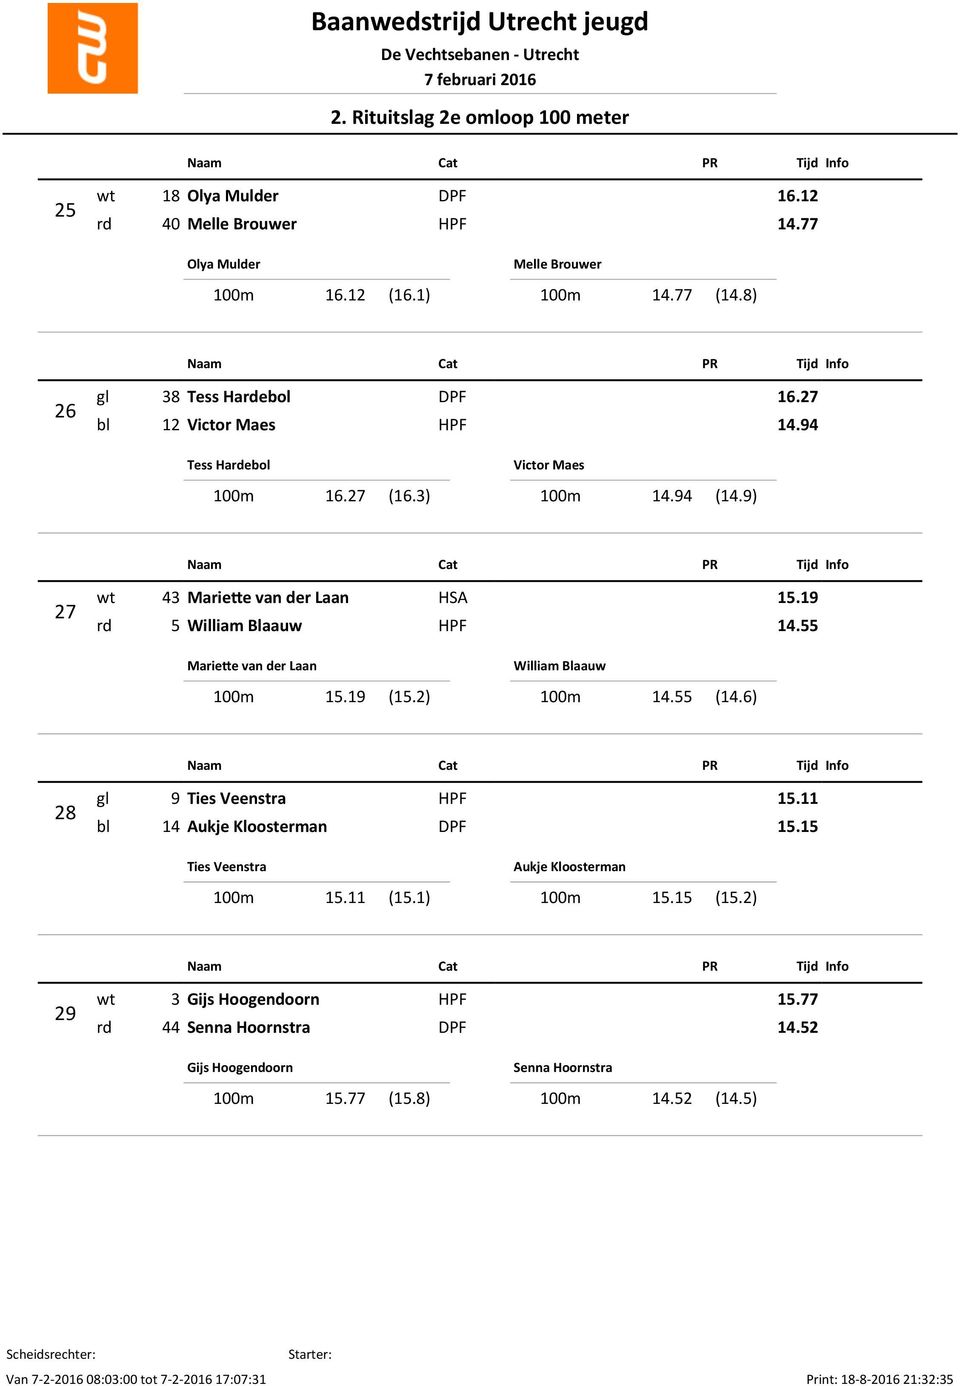 55 Marie e van der Laan 100m 15.19 (15.2) William Blaauw 100m 14.55 (14.6) 28 gl 9 Ties Veenstra HPF 15.11 bl 14 Aukje Kloosterman DPF 15.15 Ties Veenstra 100m 15.11 (15.